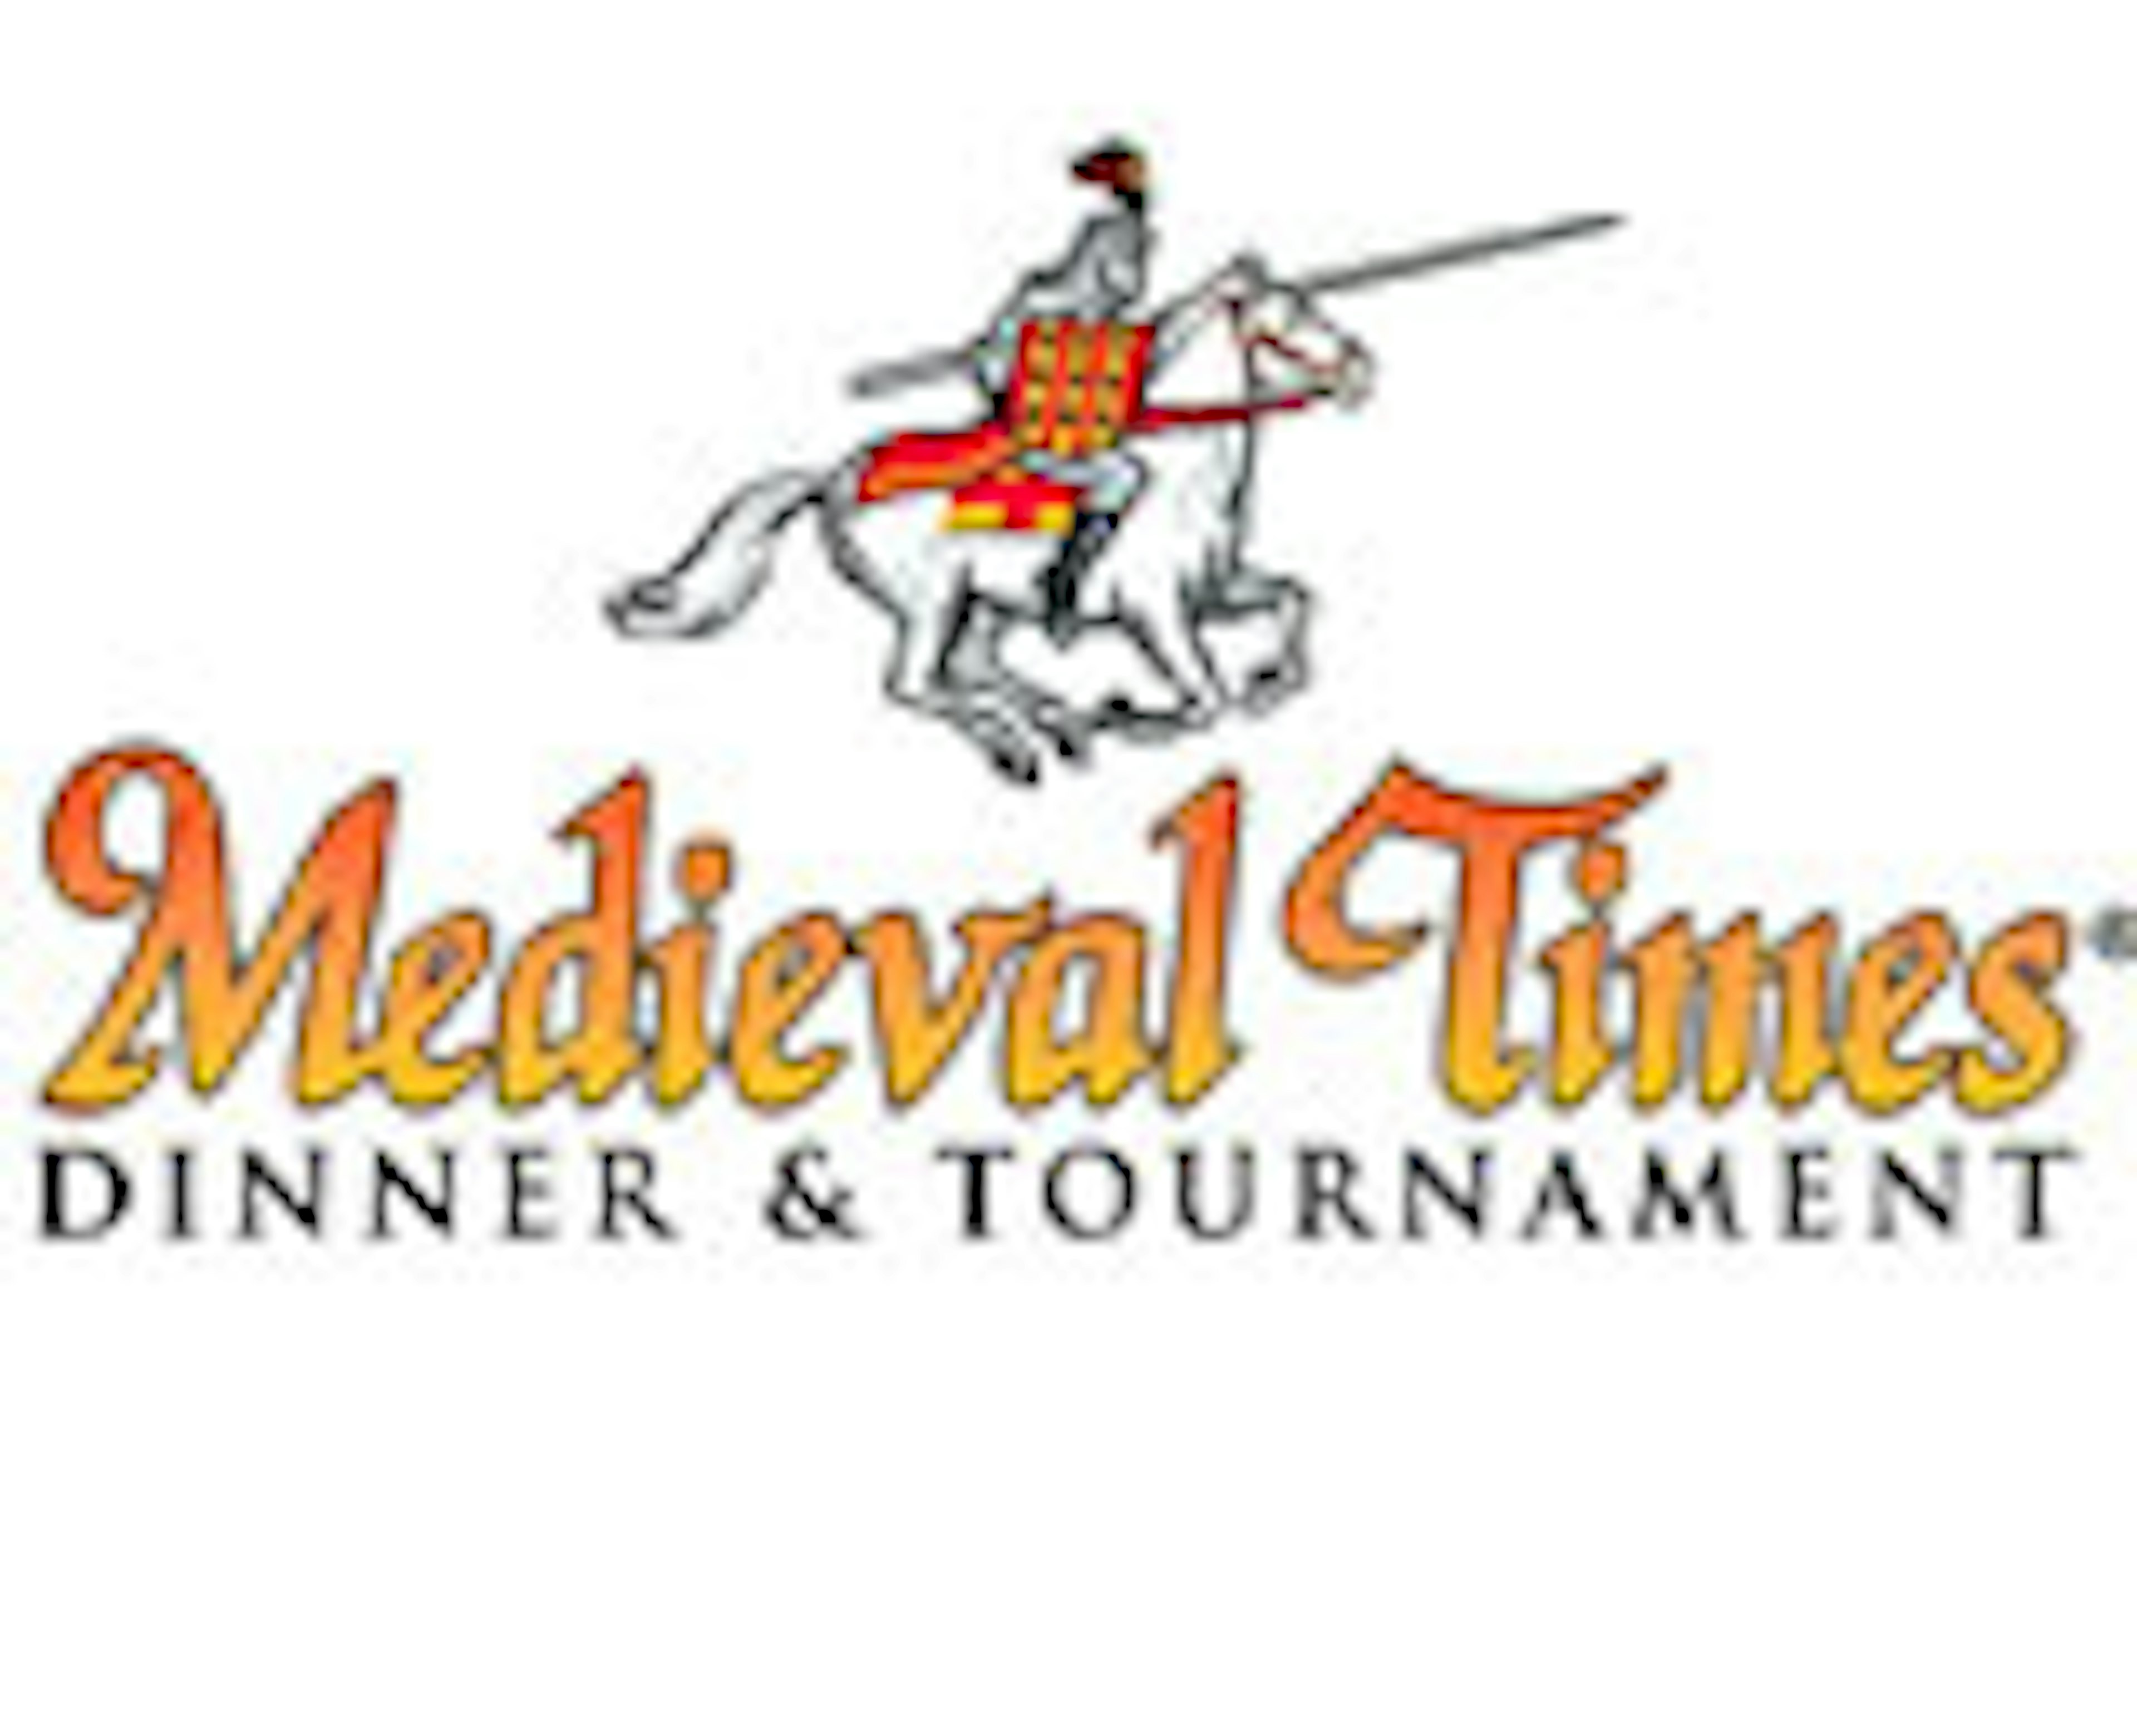 Medieval Times Dinner & Tournament